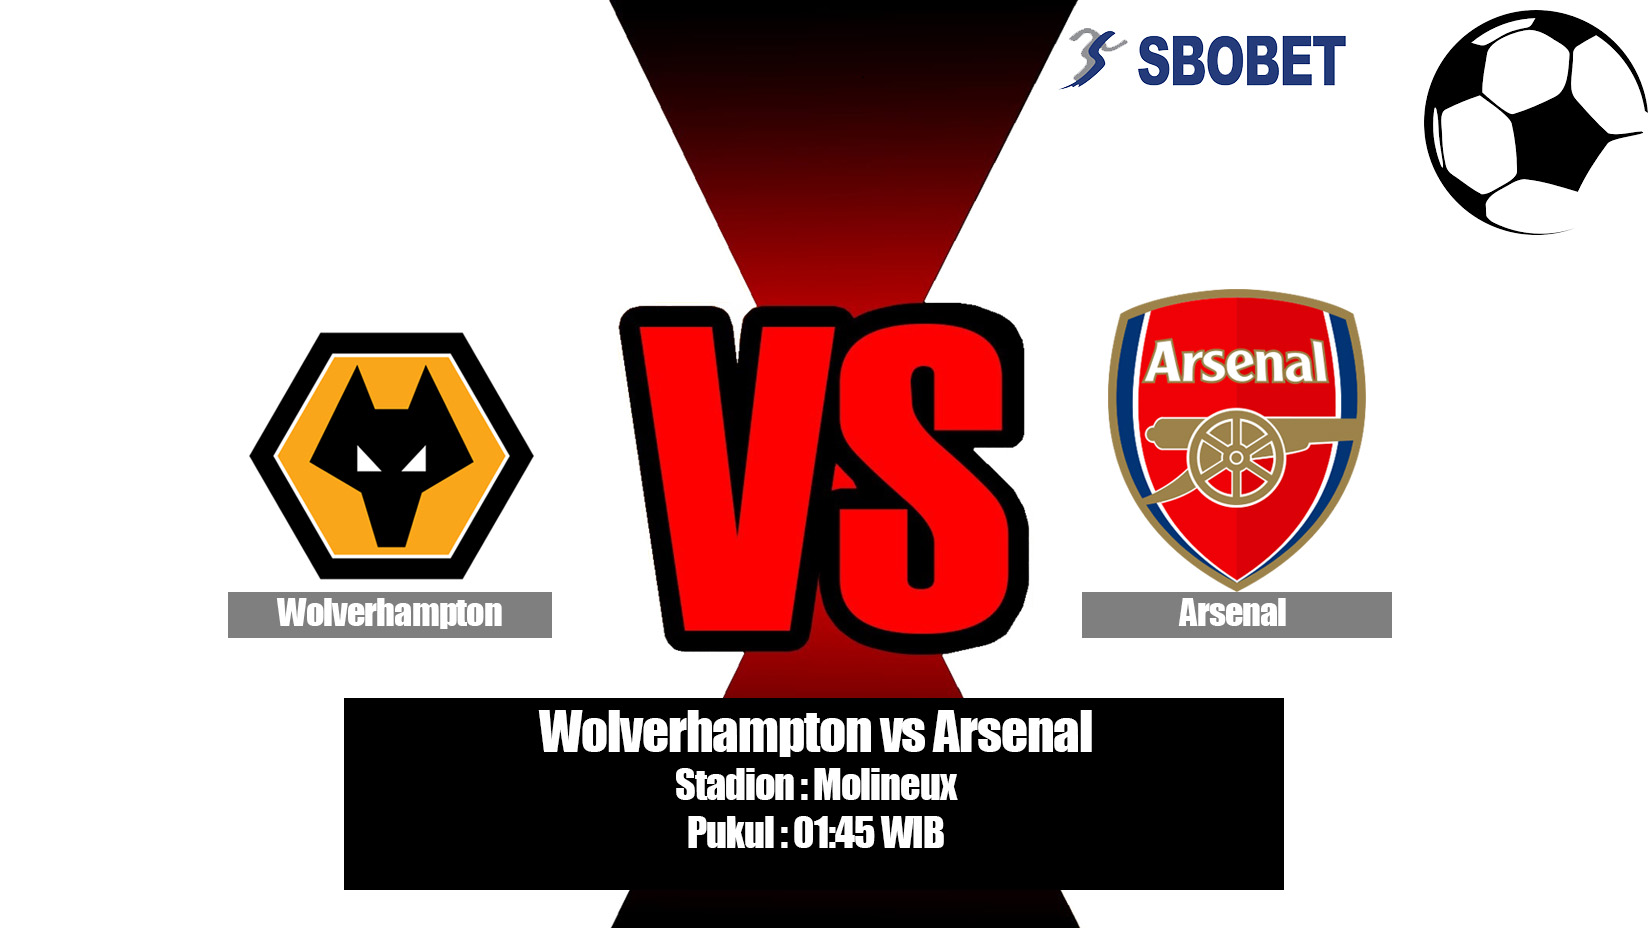 Prediksi Bola Wolverhampton vs Arsenal 25 April 2019.jpg